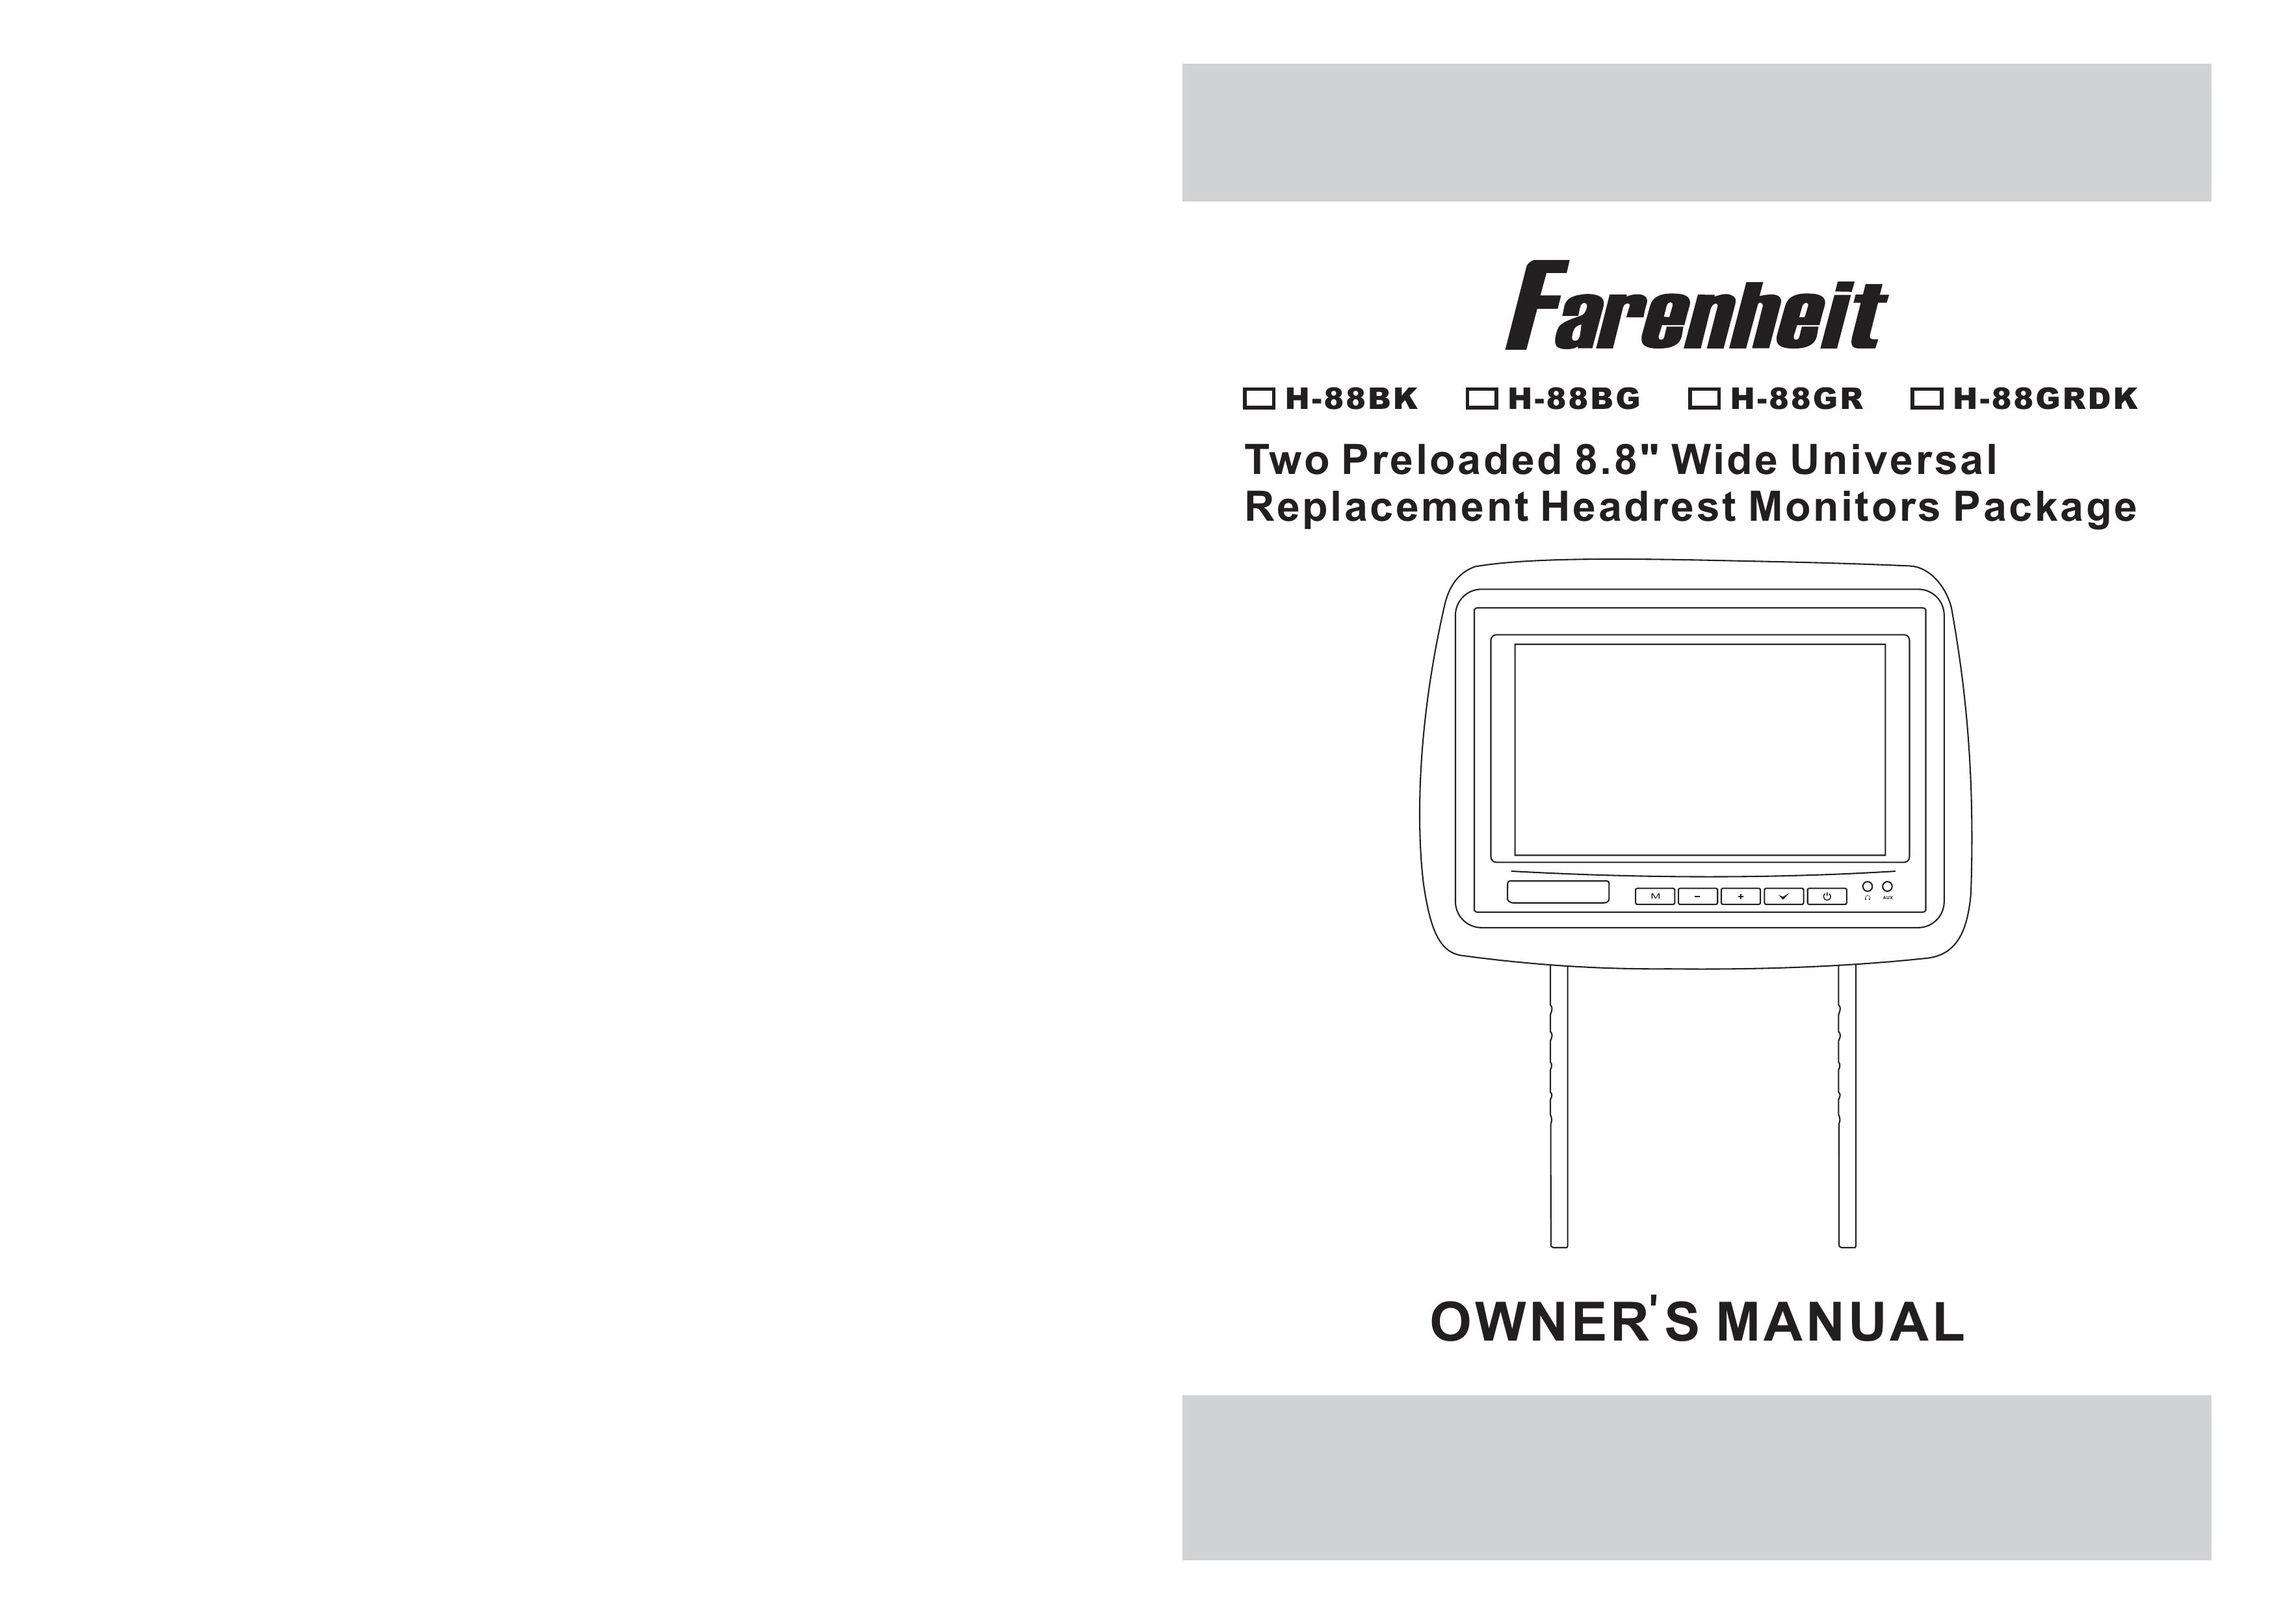 Farenheit Technologies H-88GRDK Car Video System User Manual